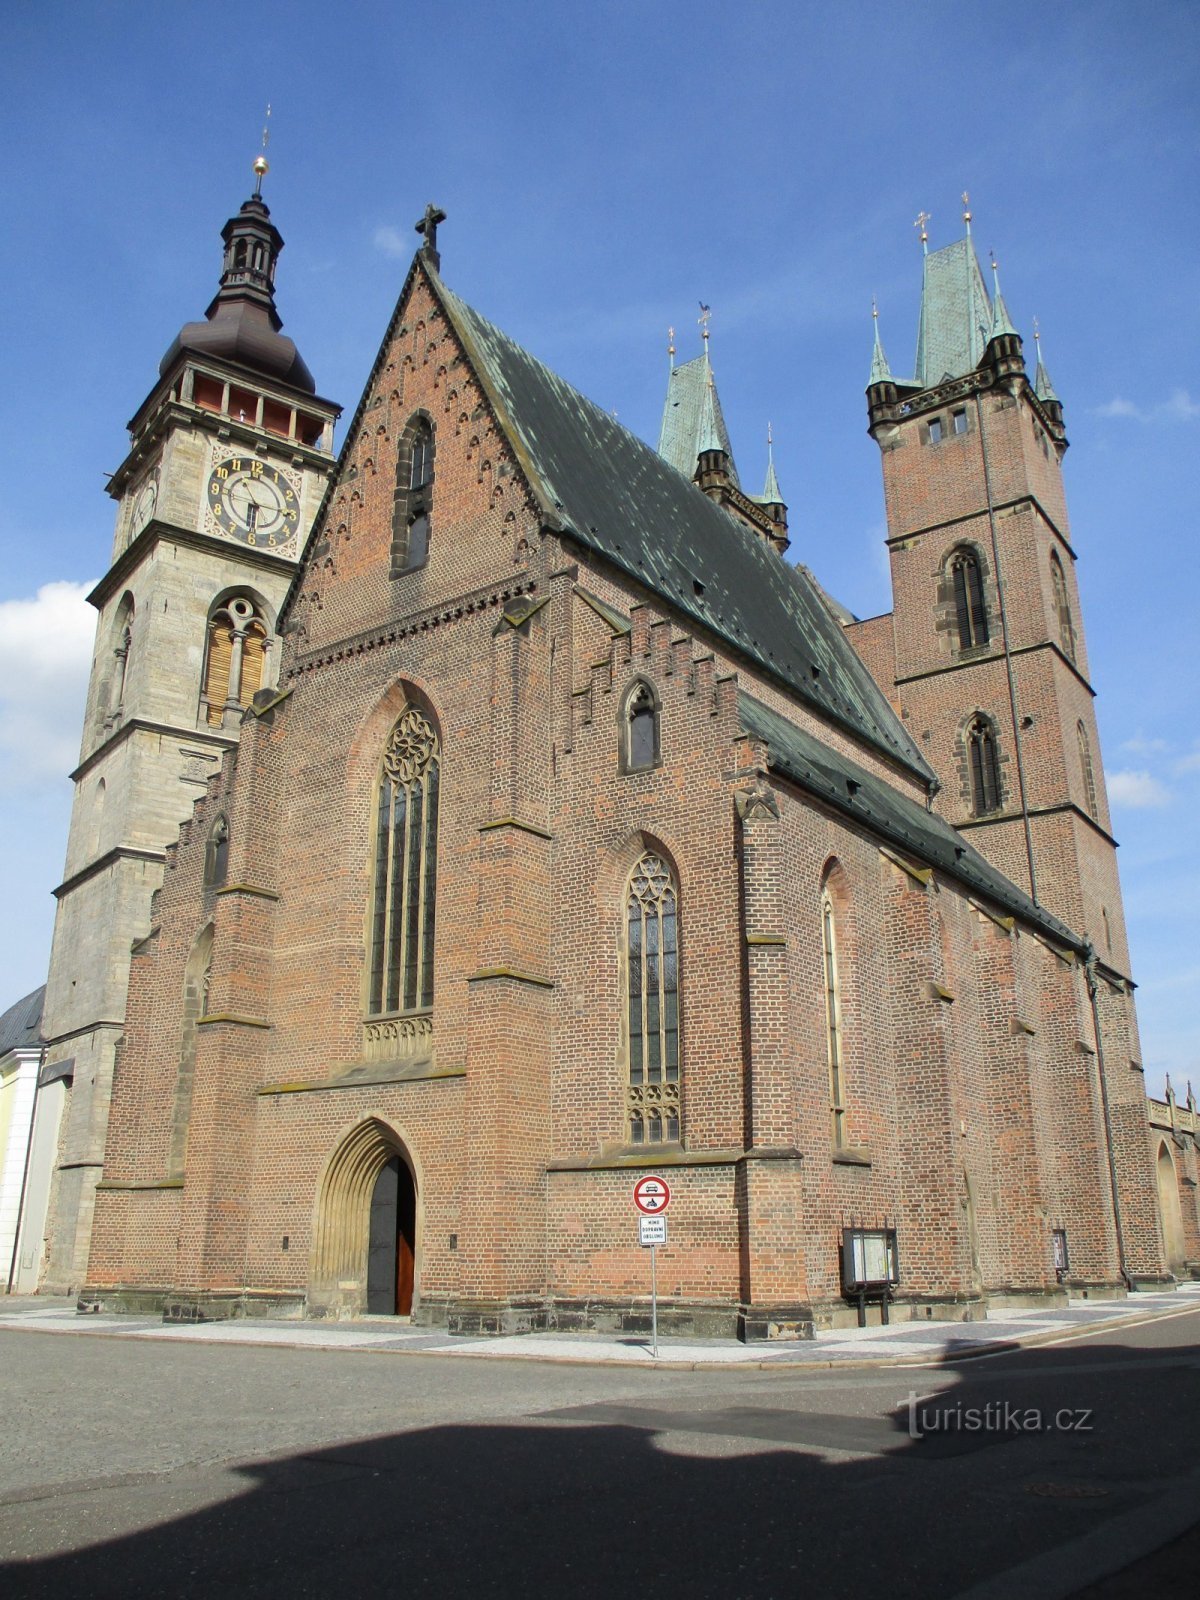 La Torre Bianca e la Cattedrale di S. Spirito (Hradec Králové, 15.9.2019/XNUMX/XNUMX)